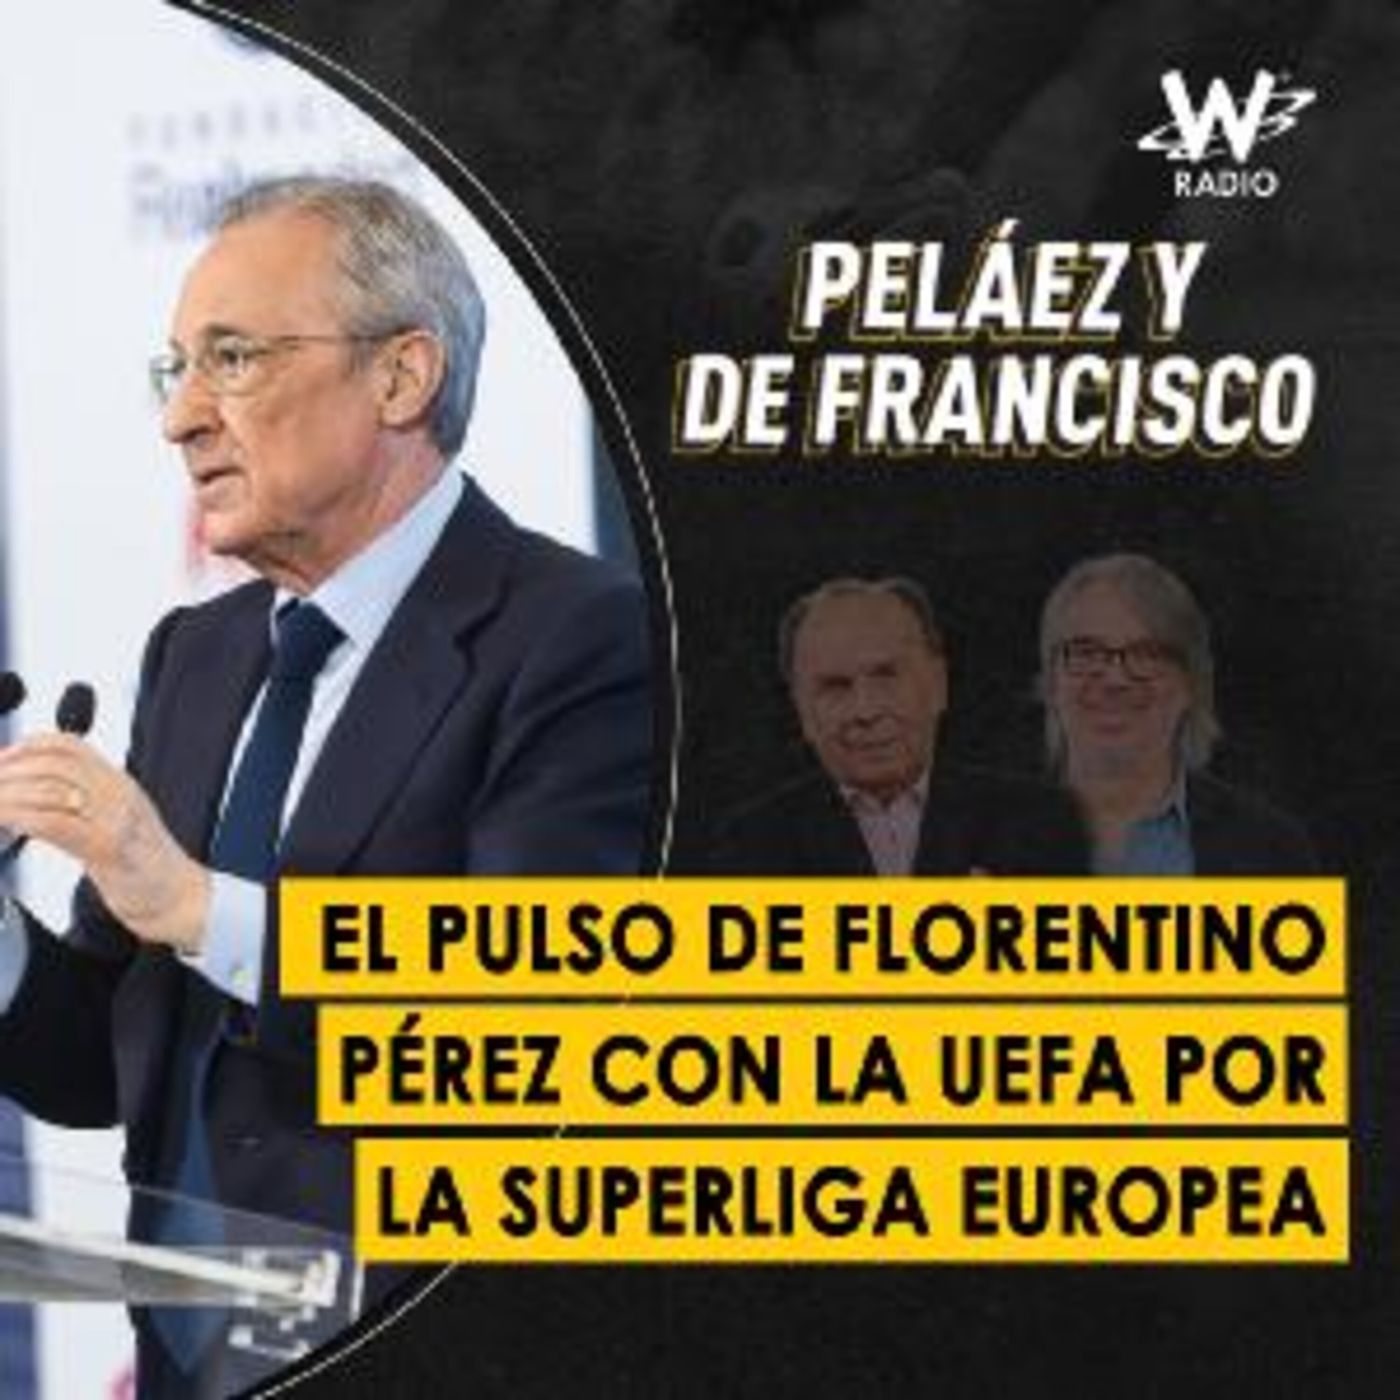 El pulso de Florentino Pérez con la UEFA por la Superliga europea